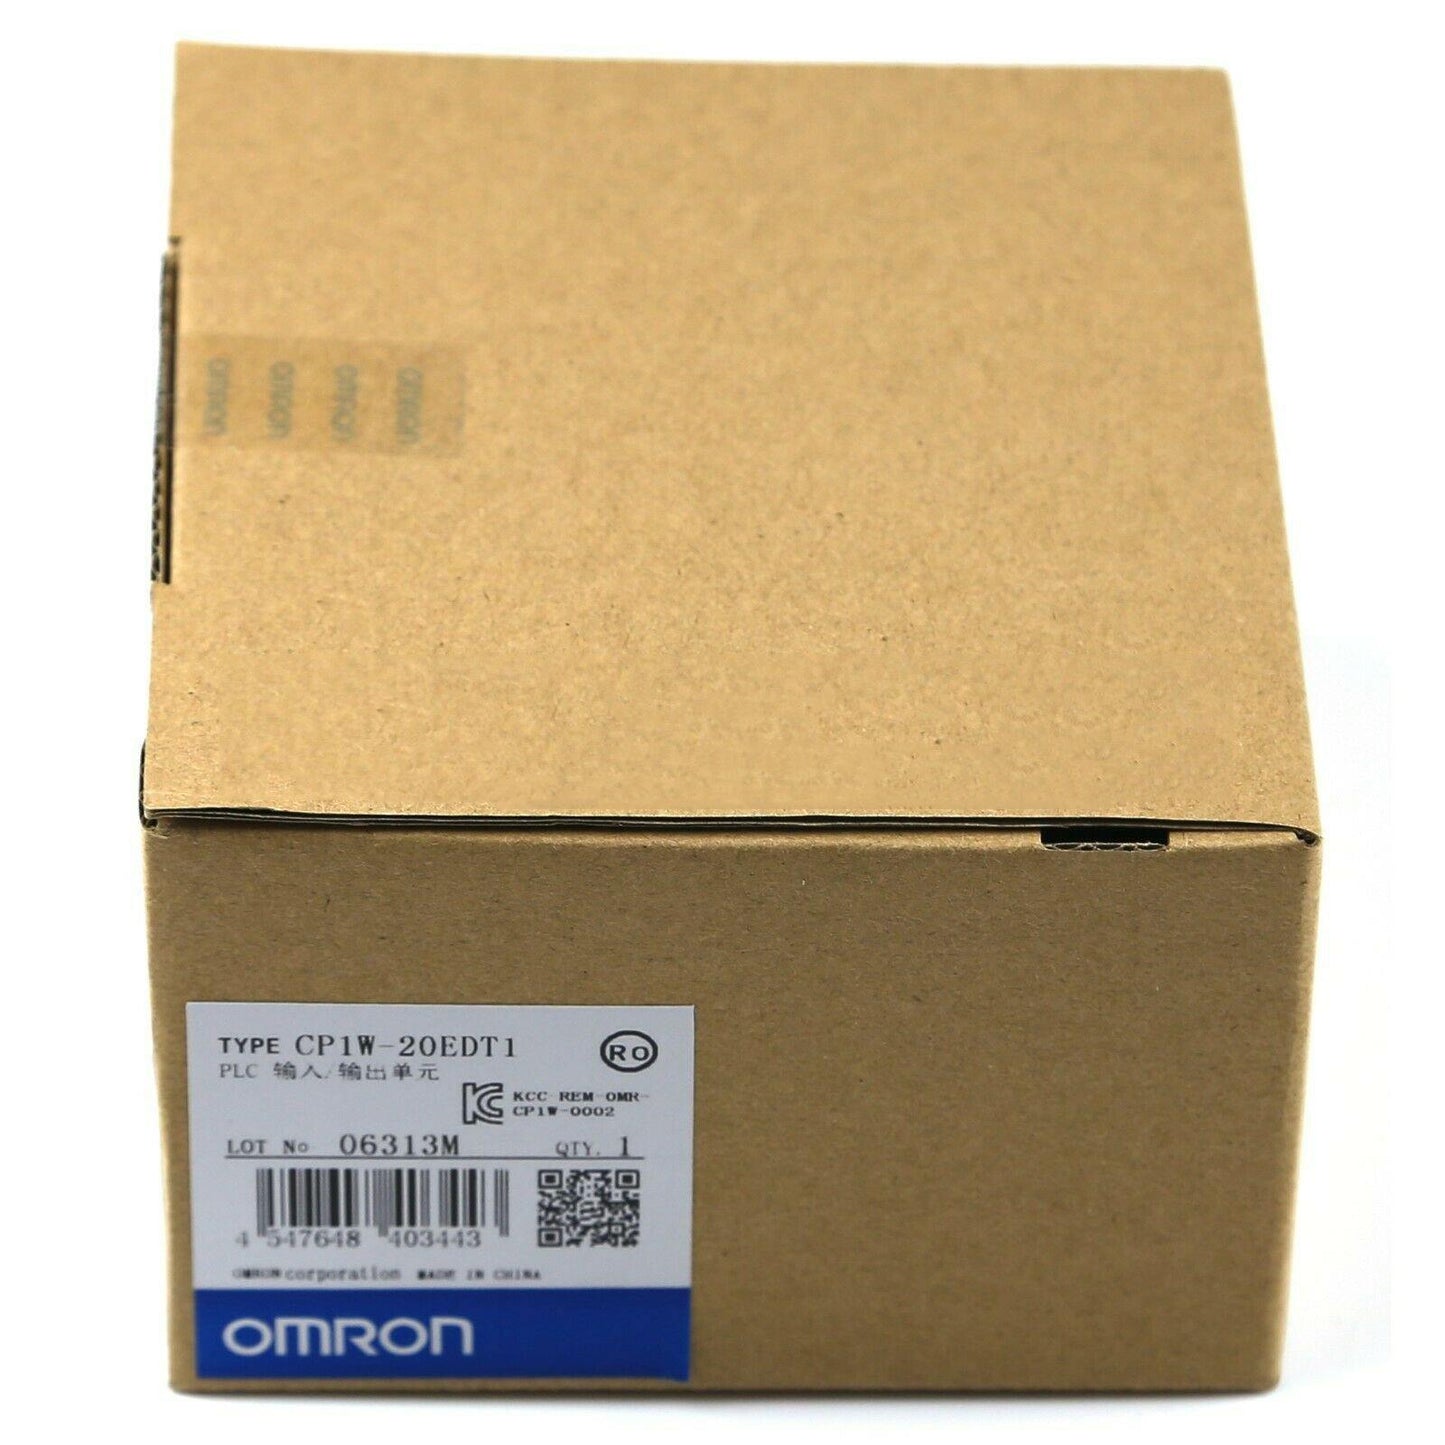 New Original Omron CP1W-20EDT1 CPU Unit Input/Output Unit PLC Module Controller - we